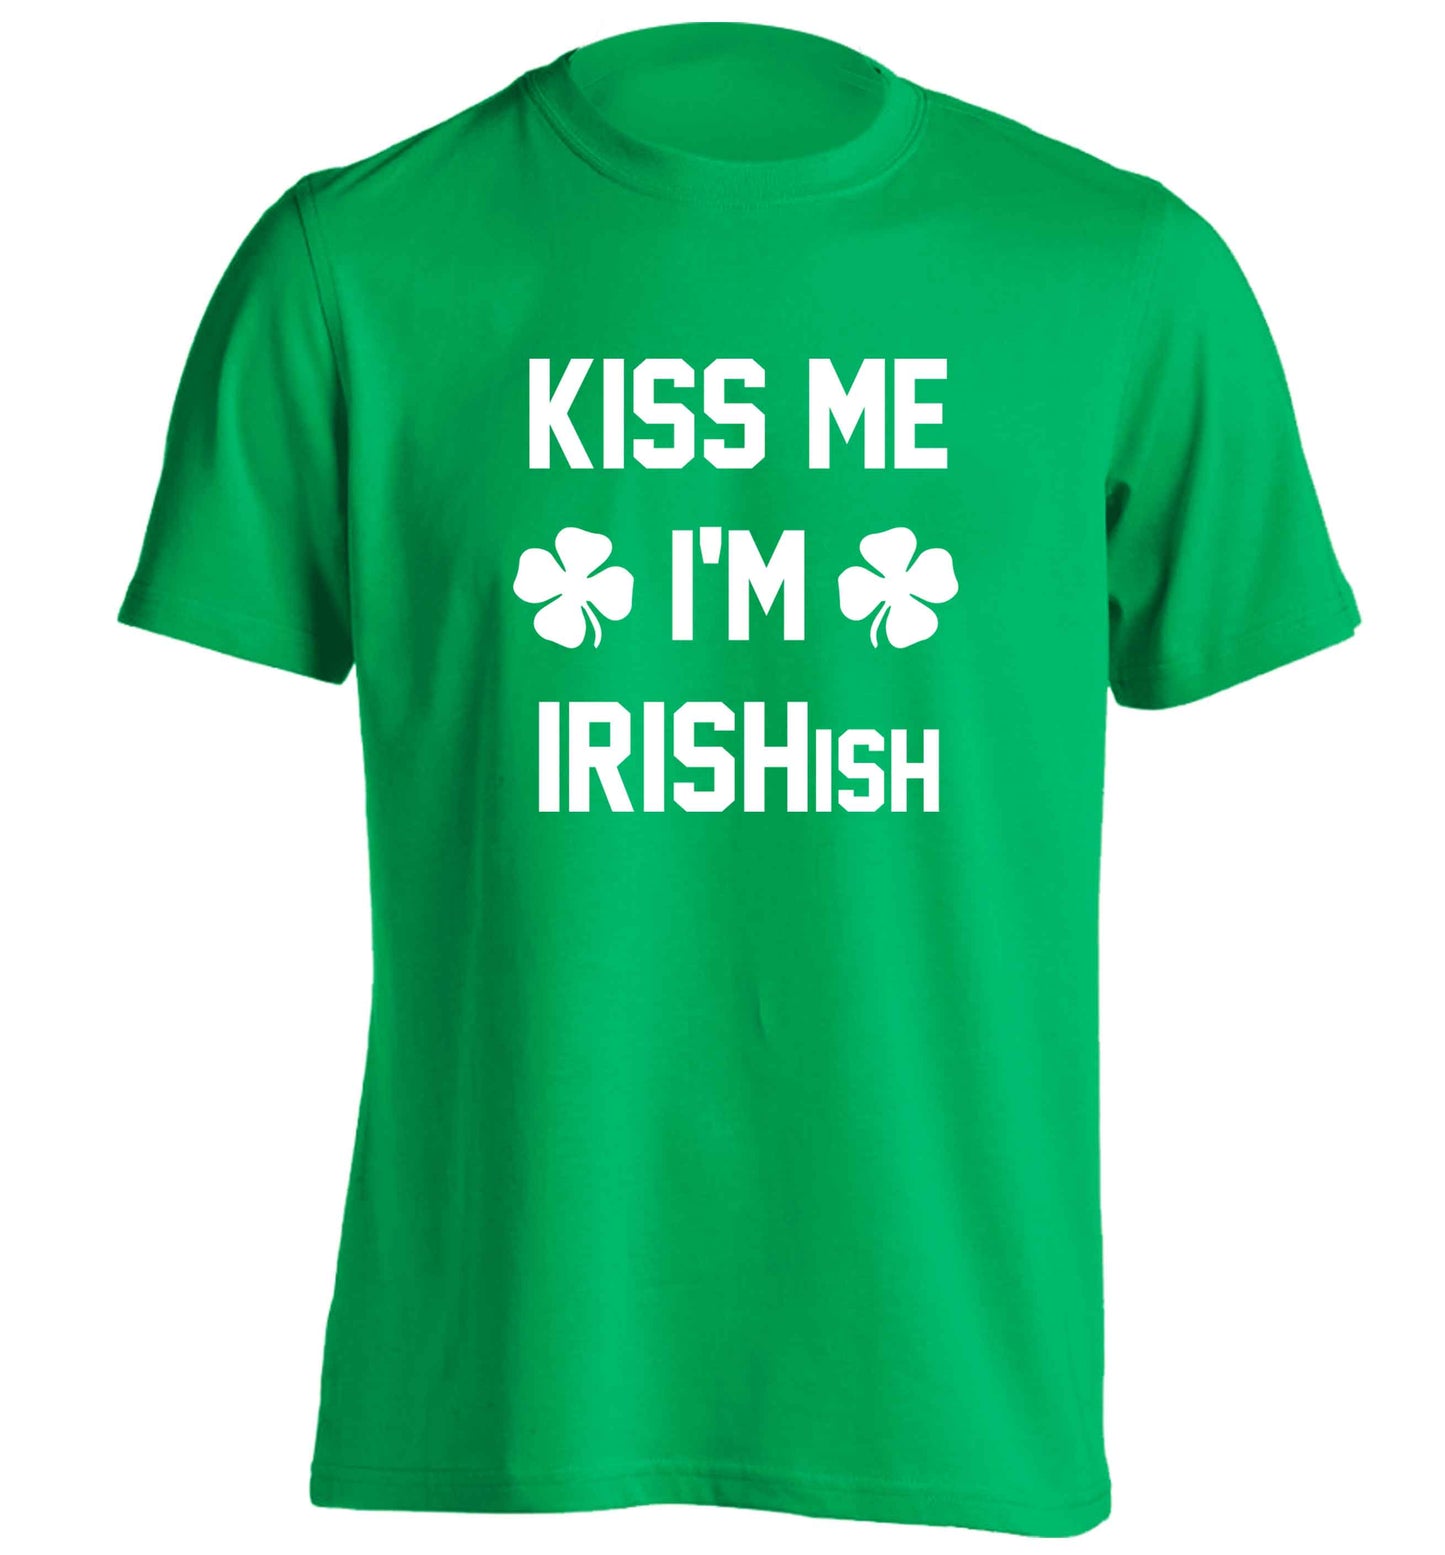 Kiss me I'm Irishish adults unisex green Tshirt 2XL